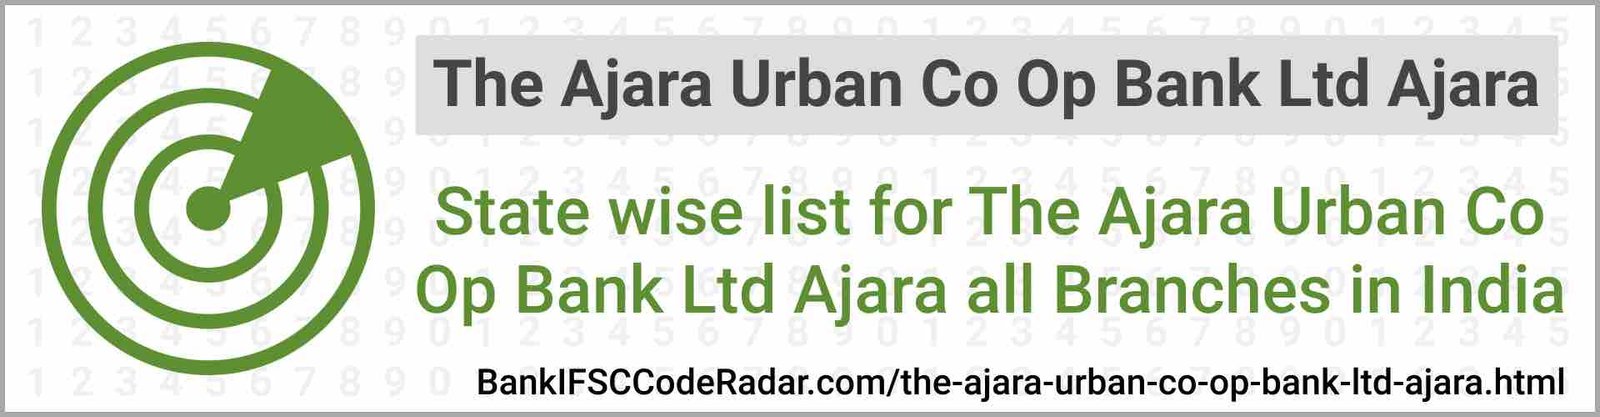 The Ajara Urban Co Op Bank Ltd Ajara All Branches India